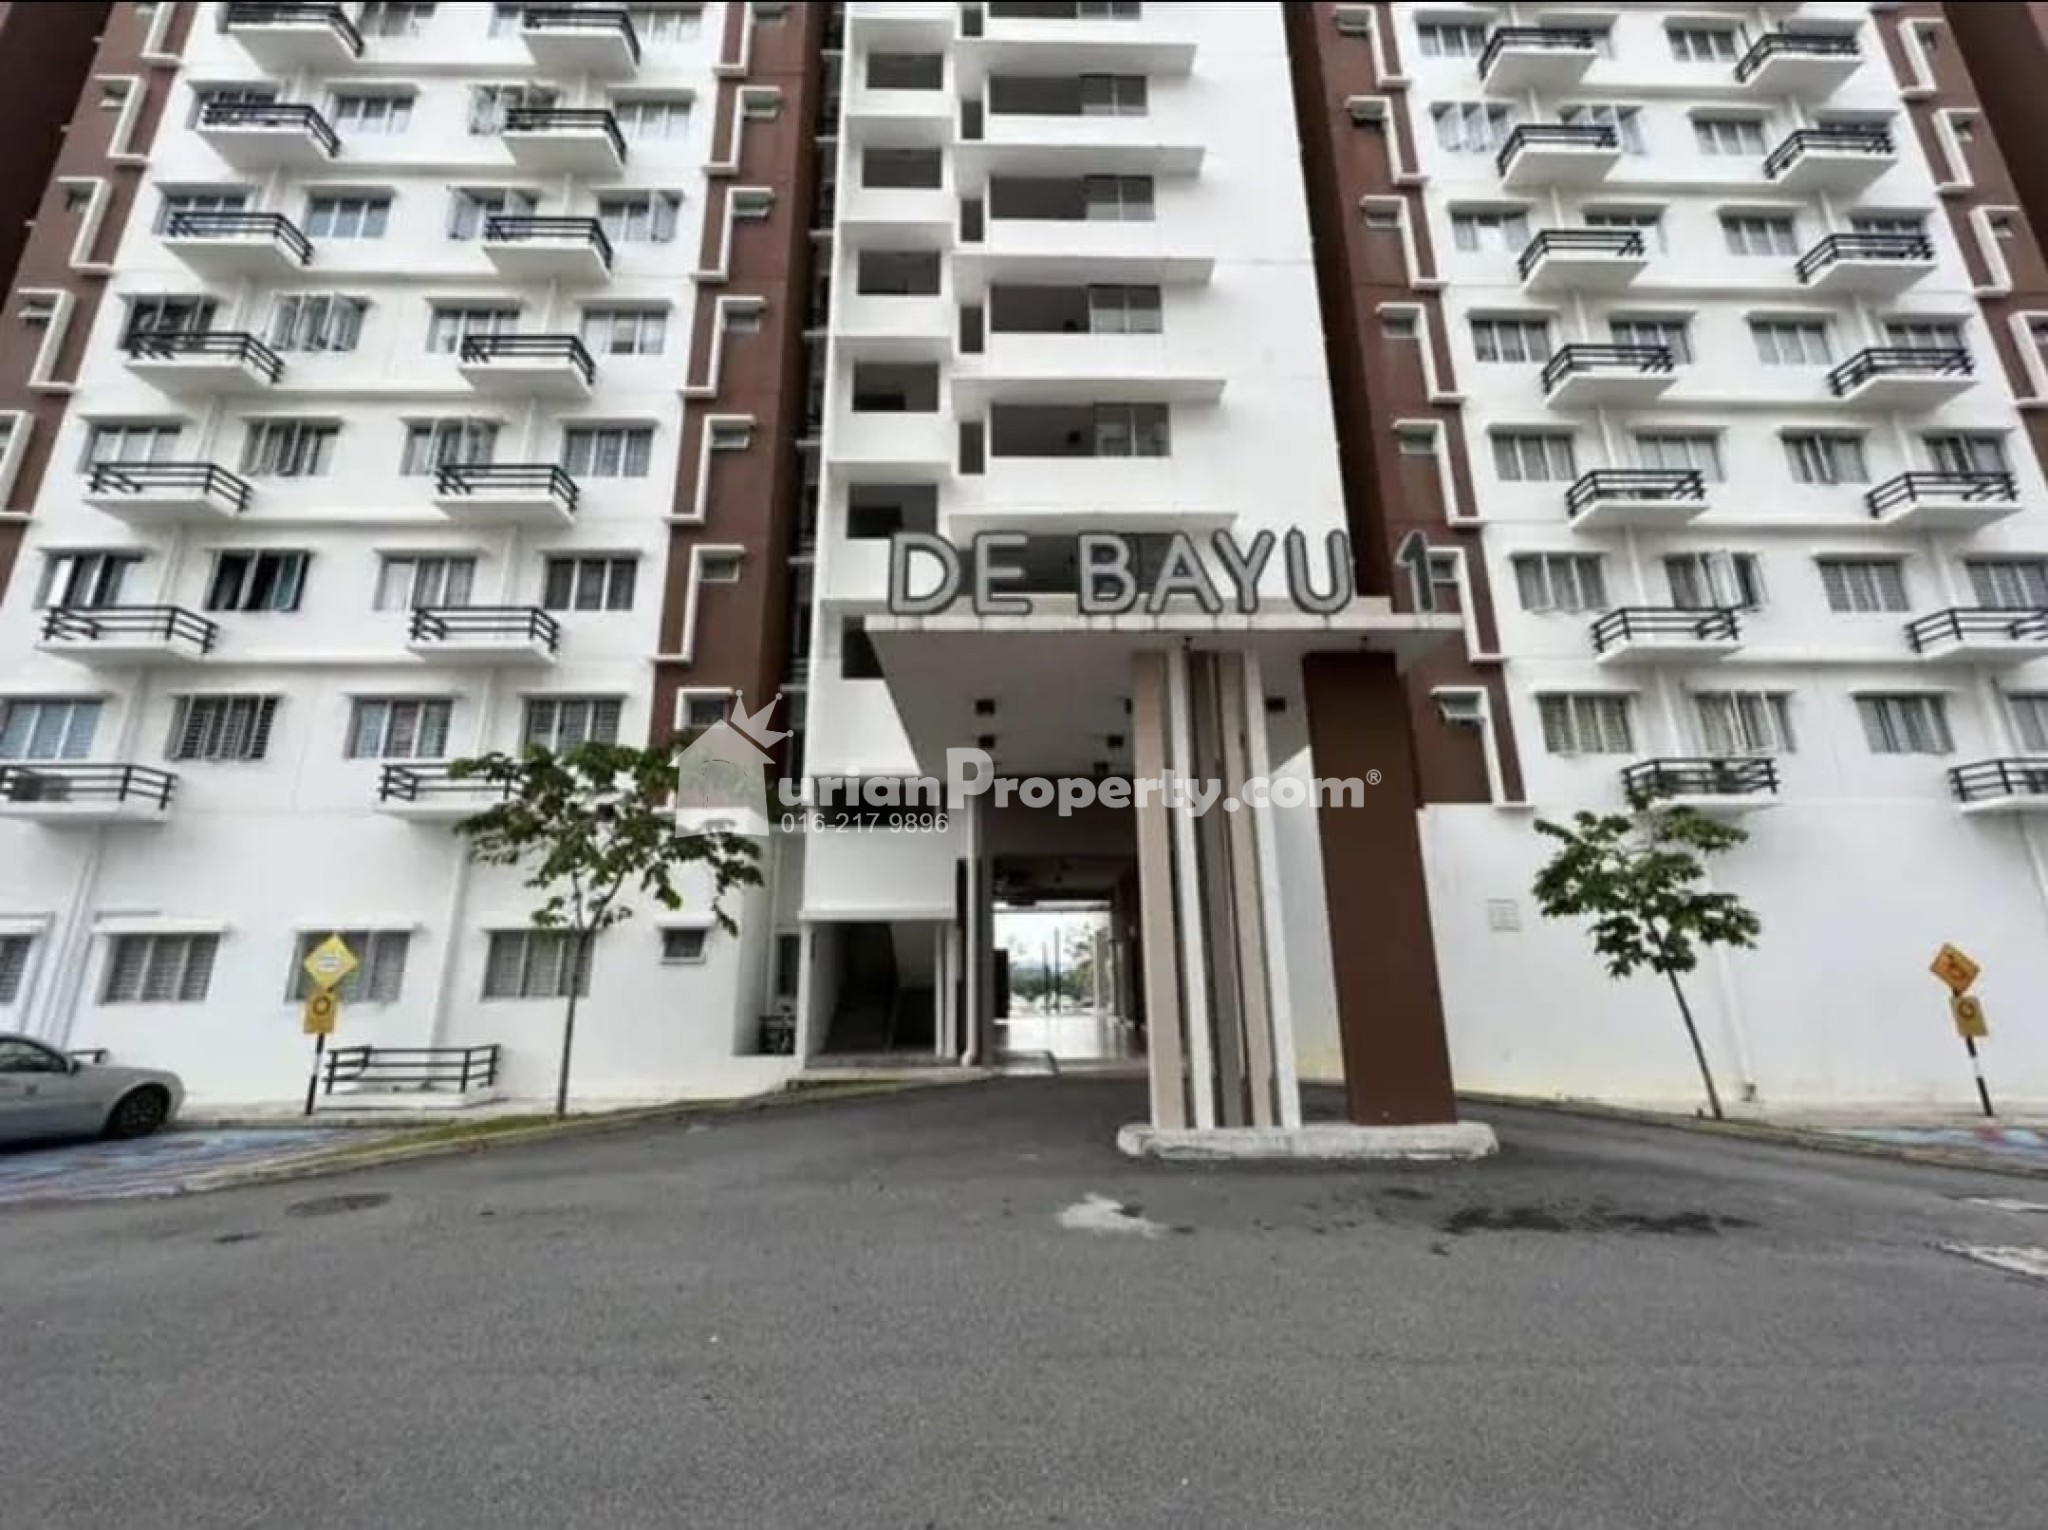 Apartment For Sale at De Bayu Apartment